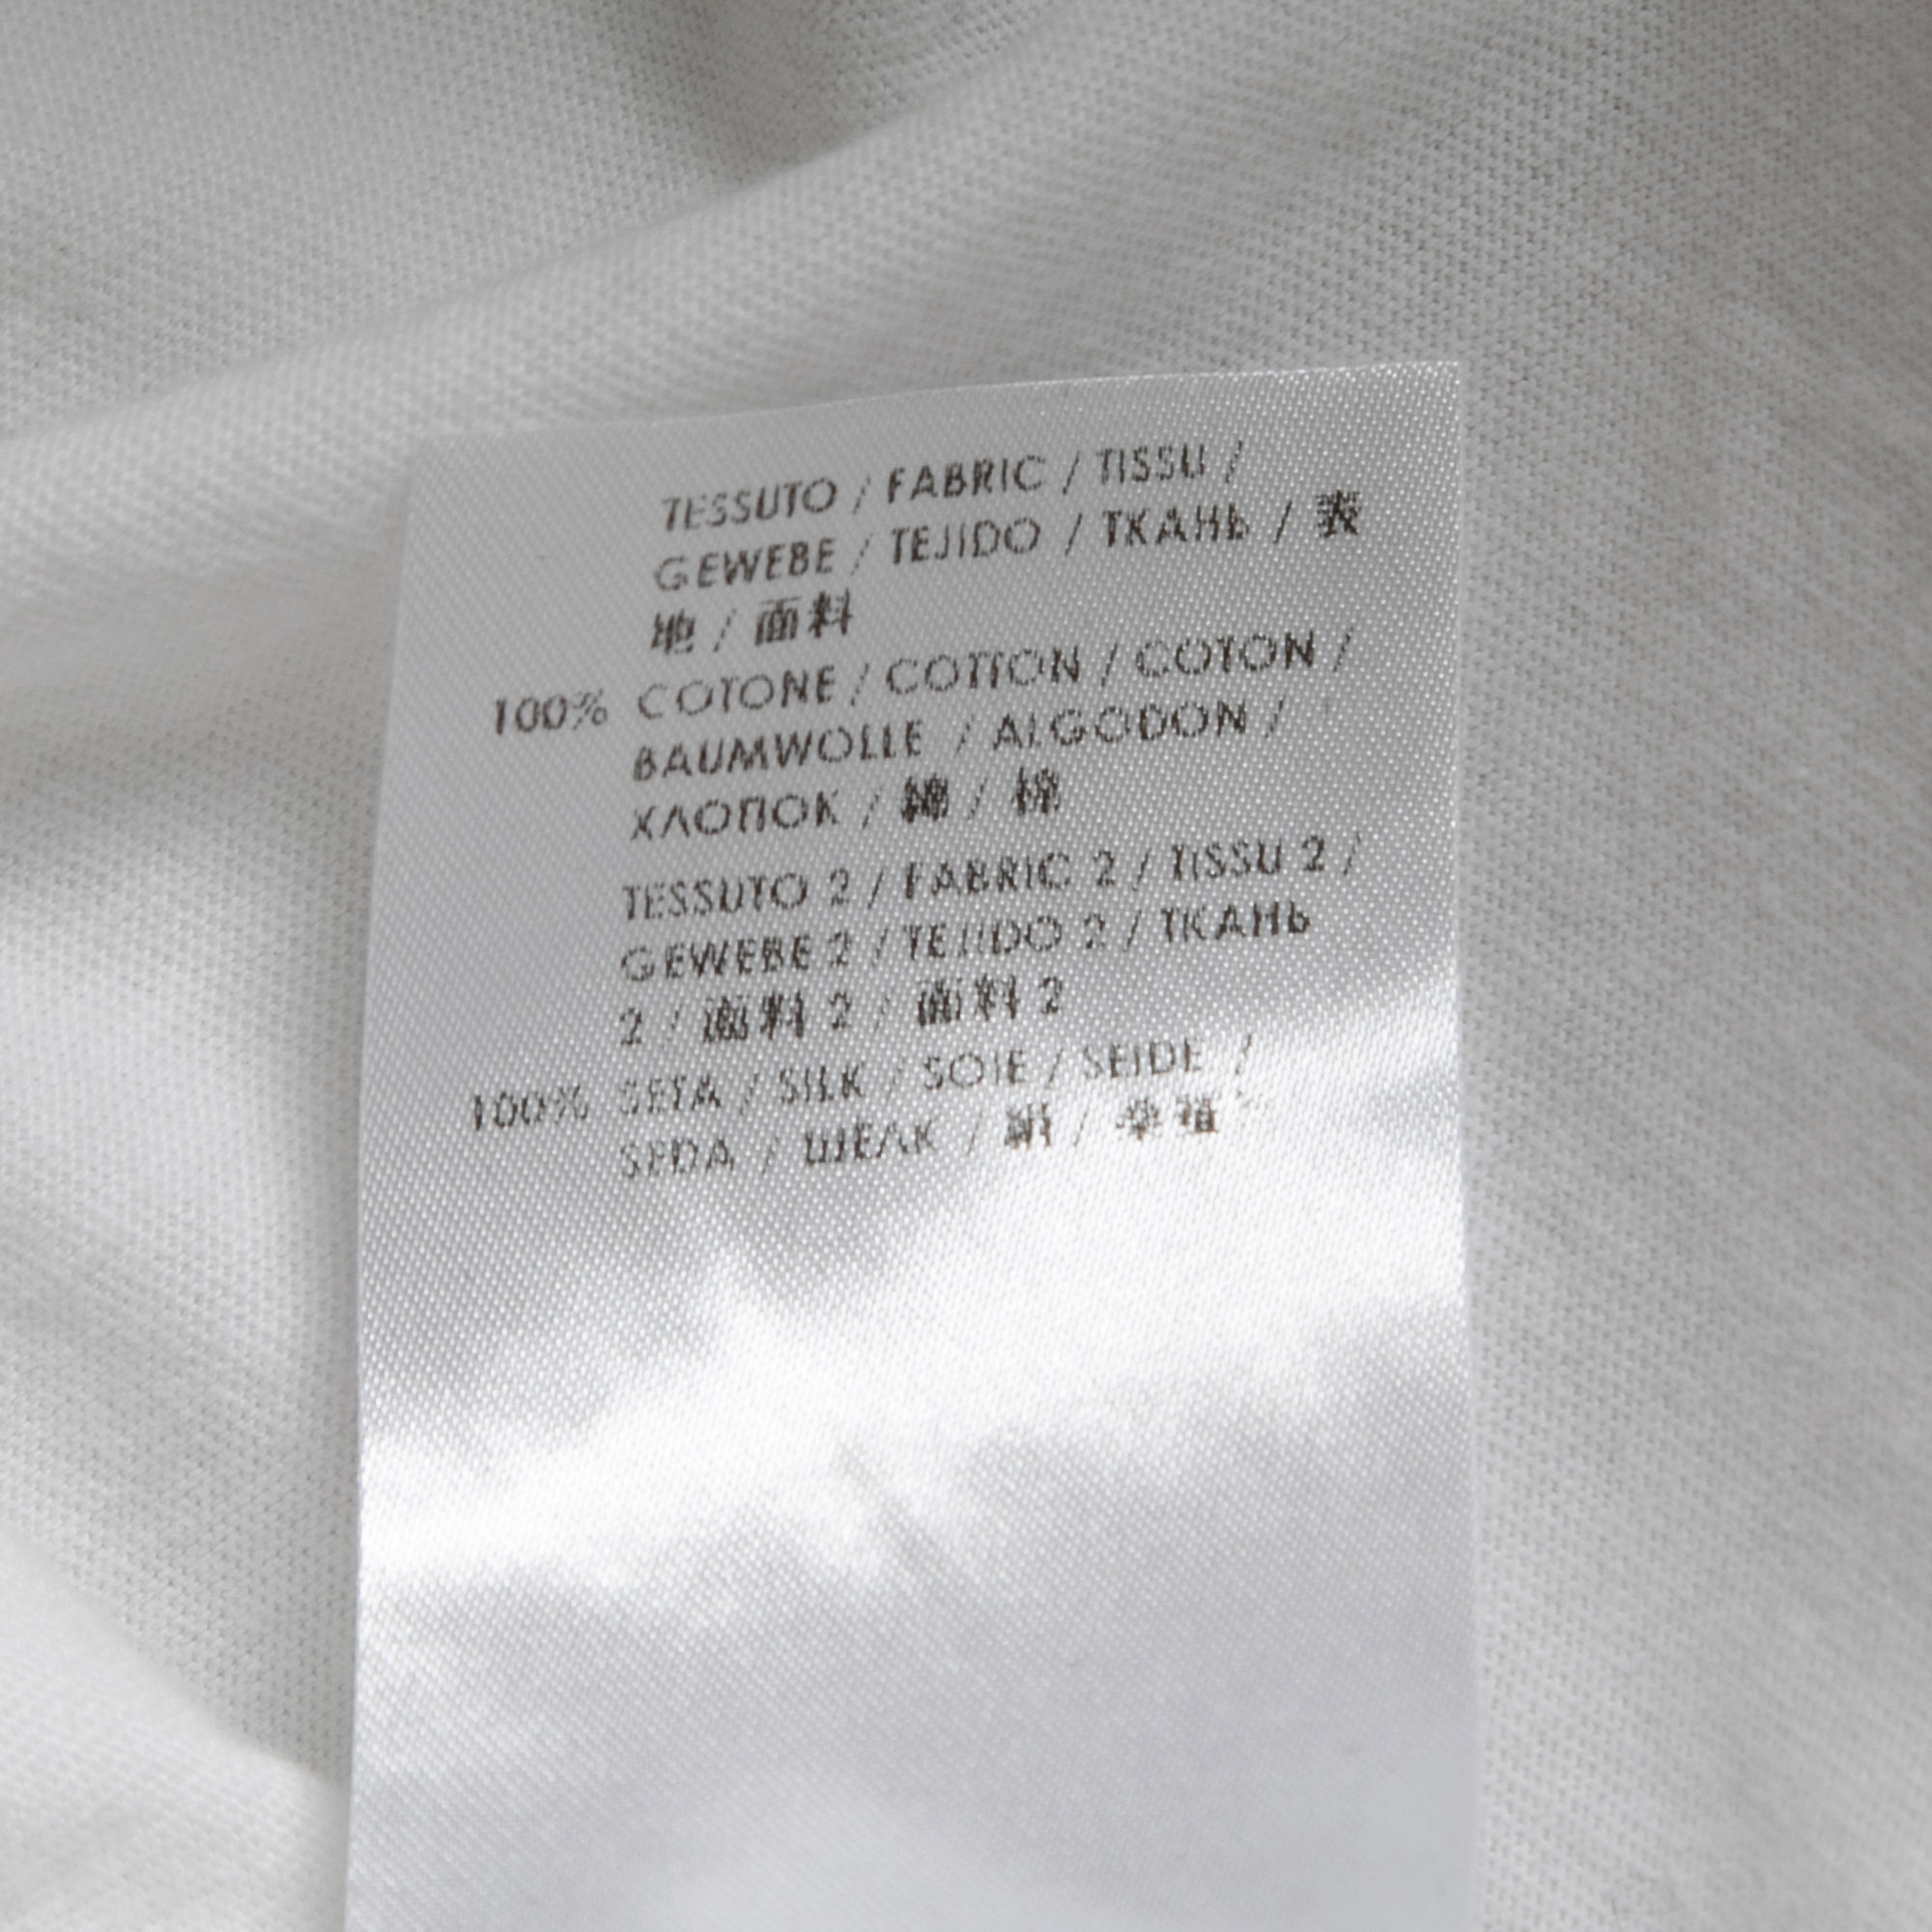 Alexander McQueen White Skull Print Cotton Crew Neck Half Sleeve T-Shirt S